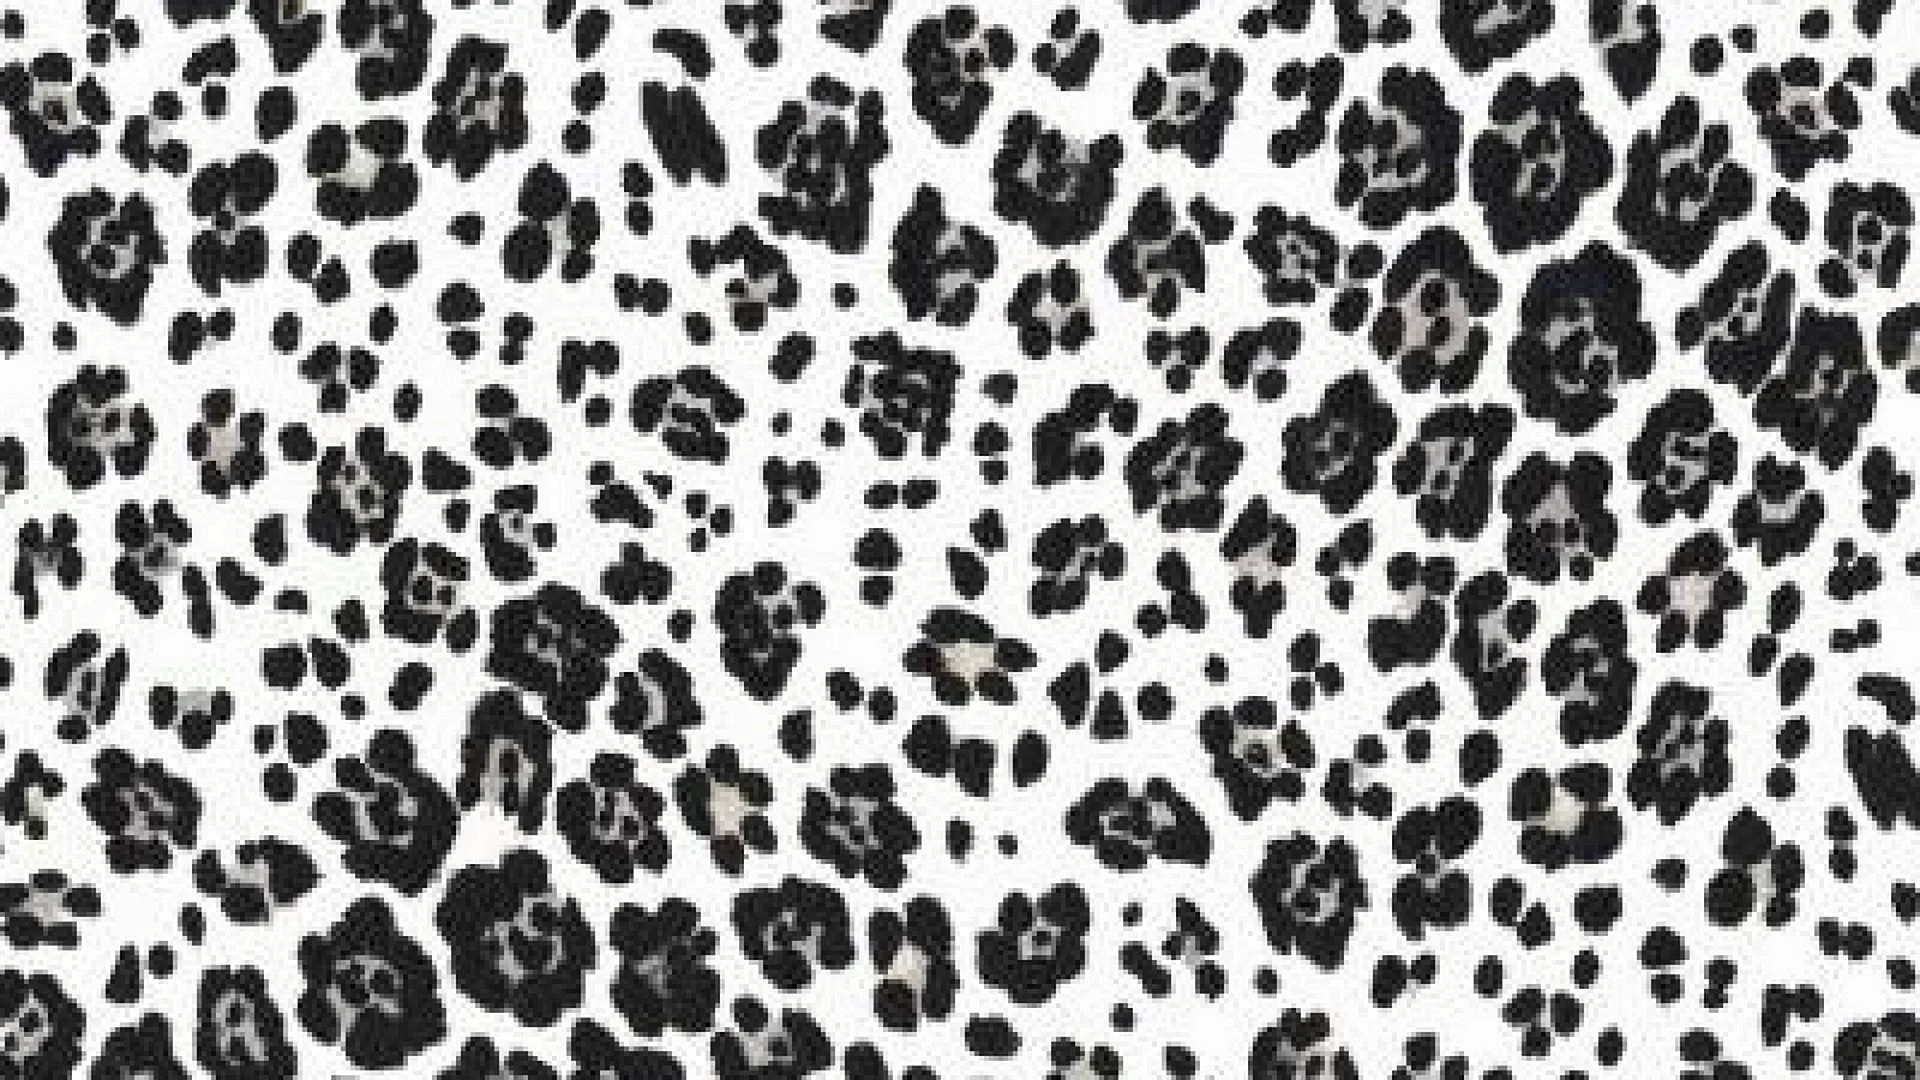 Black and White Leopard Print Wallpaper